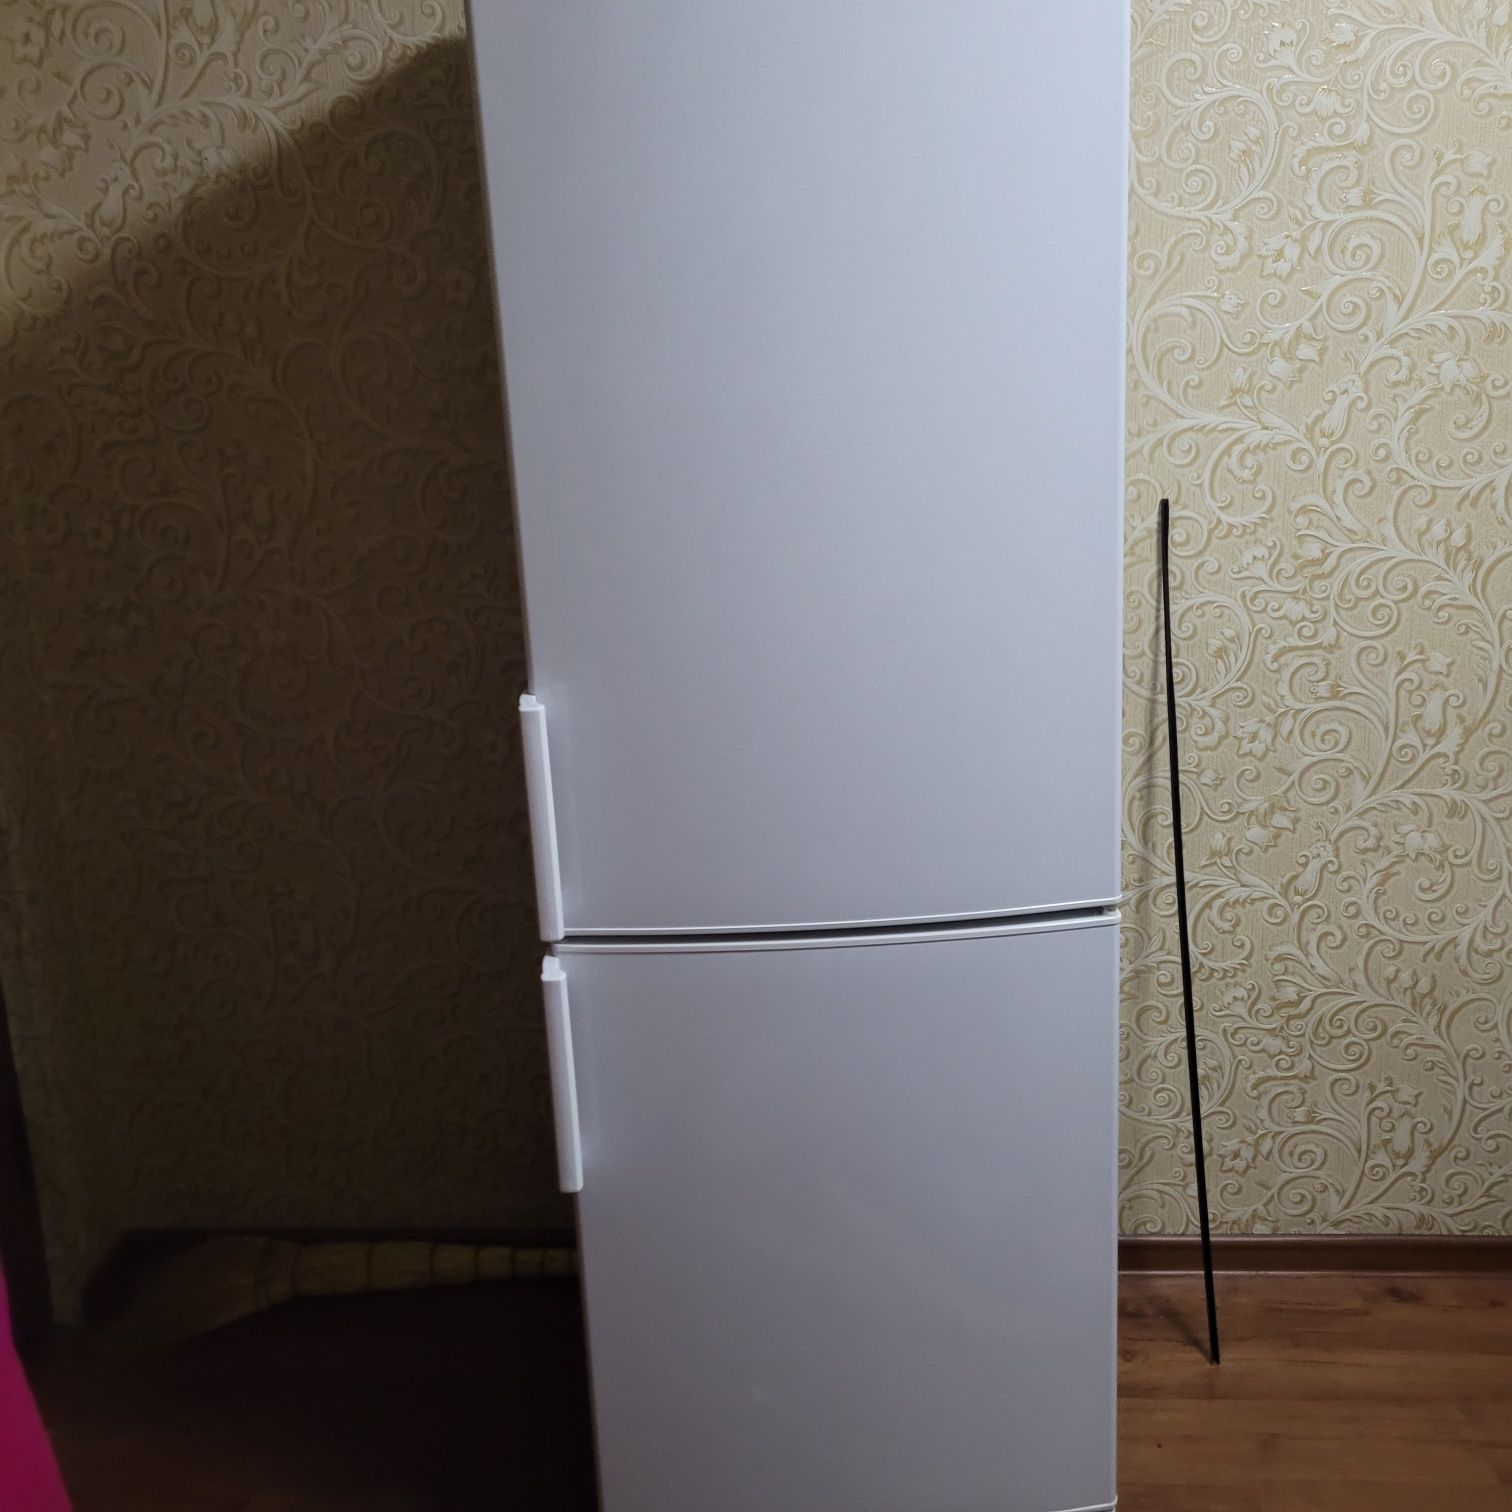 Продам холодильник(срочно)